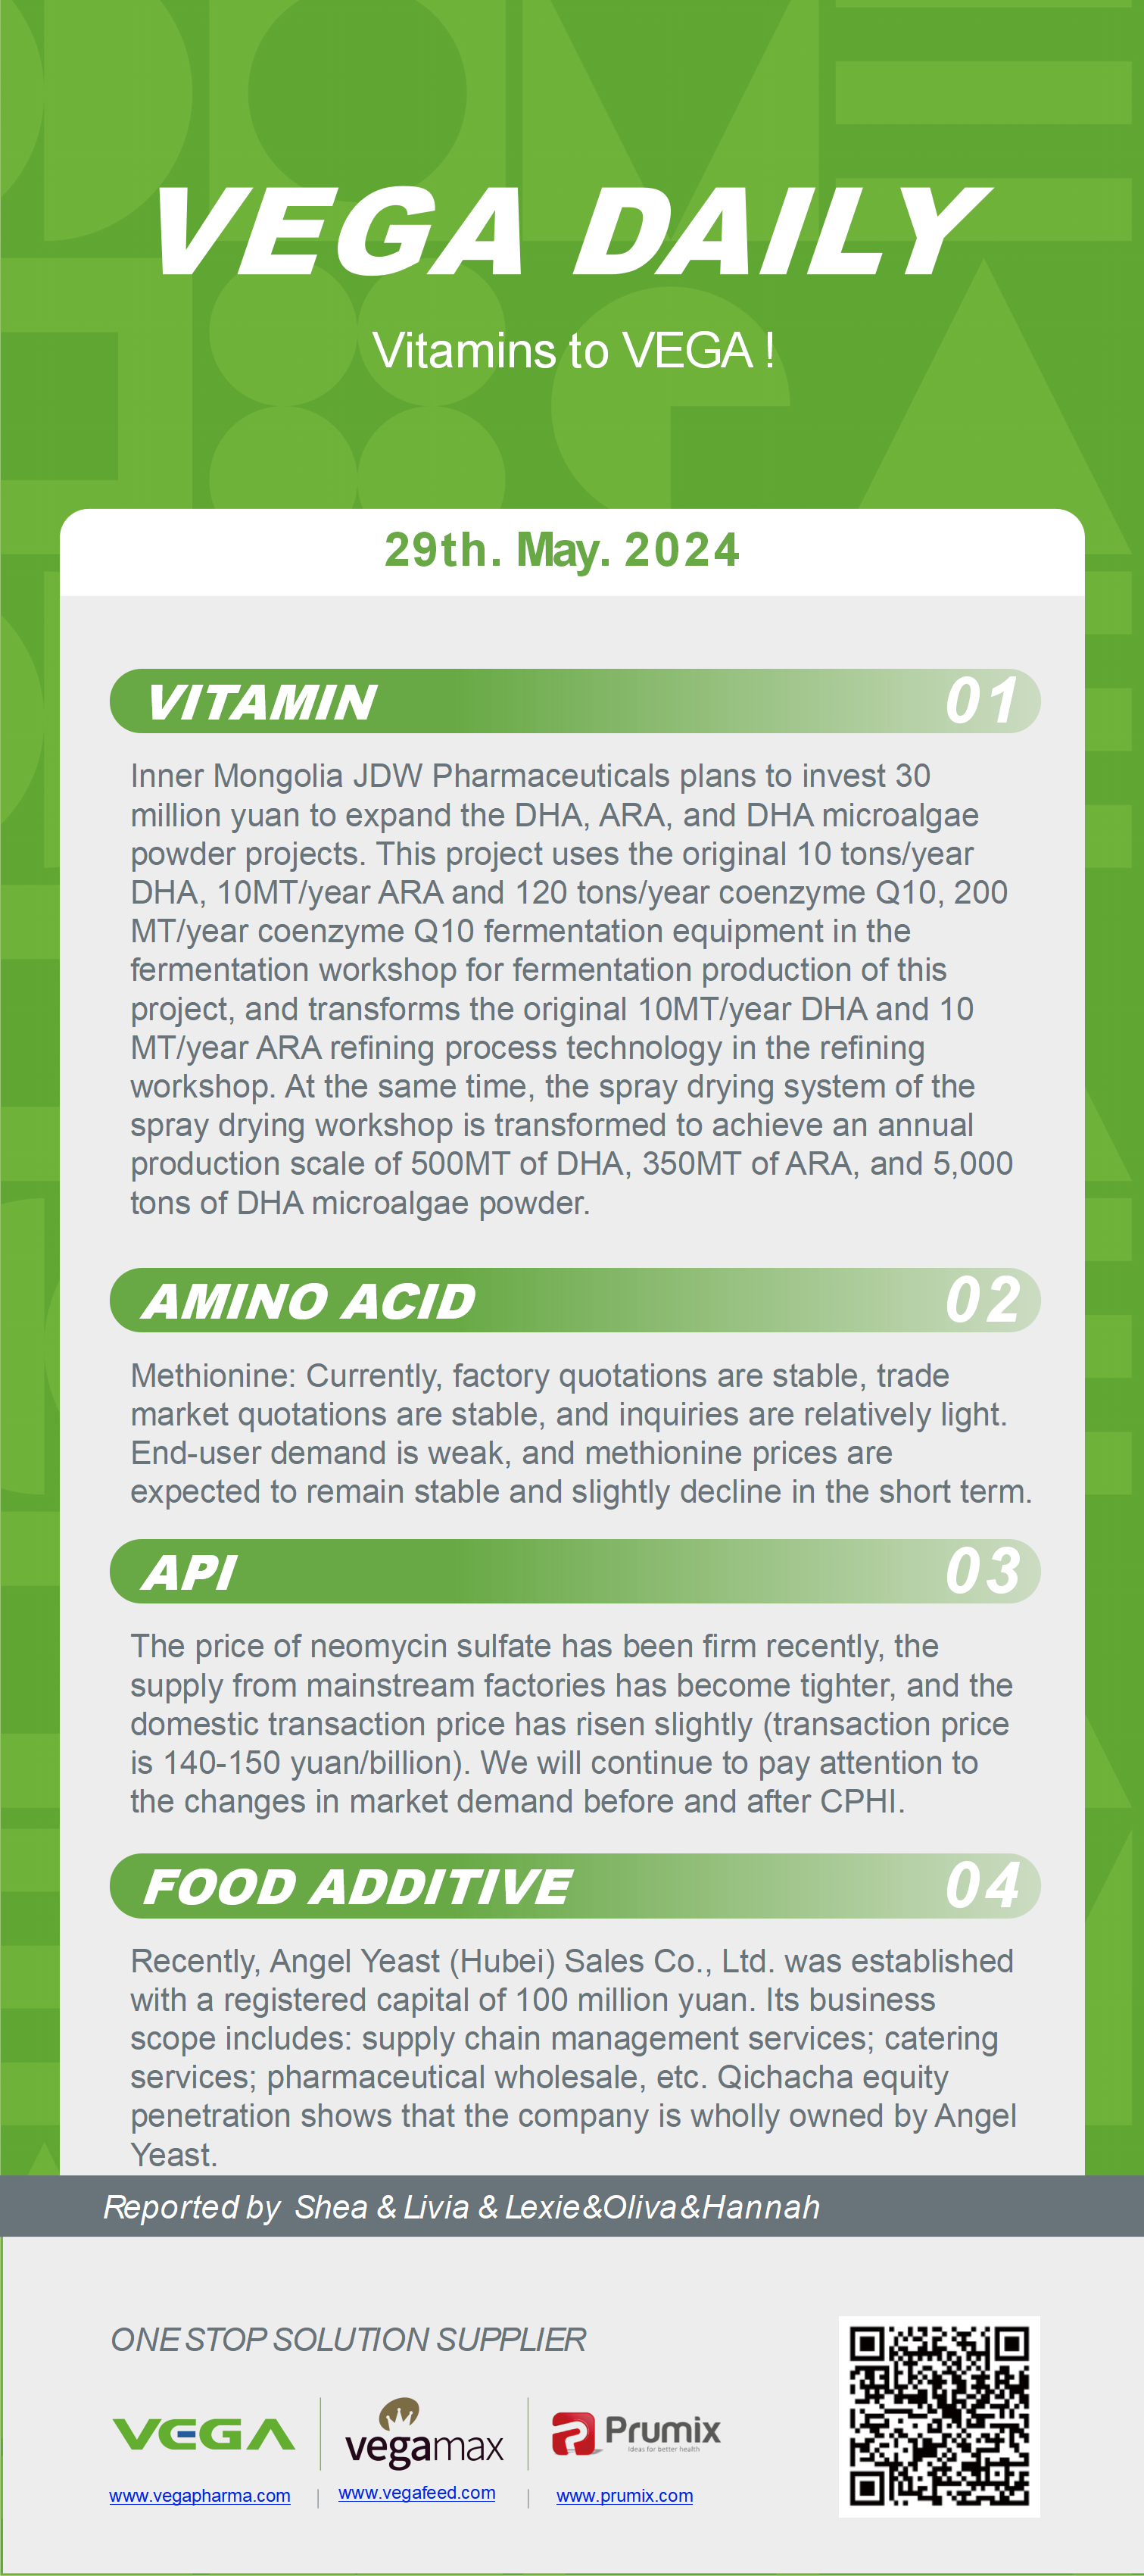 Vega Daily Dated on May 29th 2024 Vitamin Amino Acid APl Food Additives.png